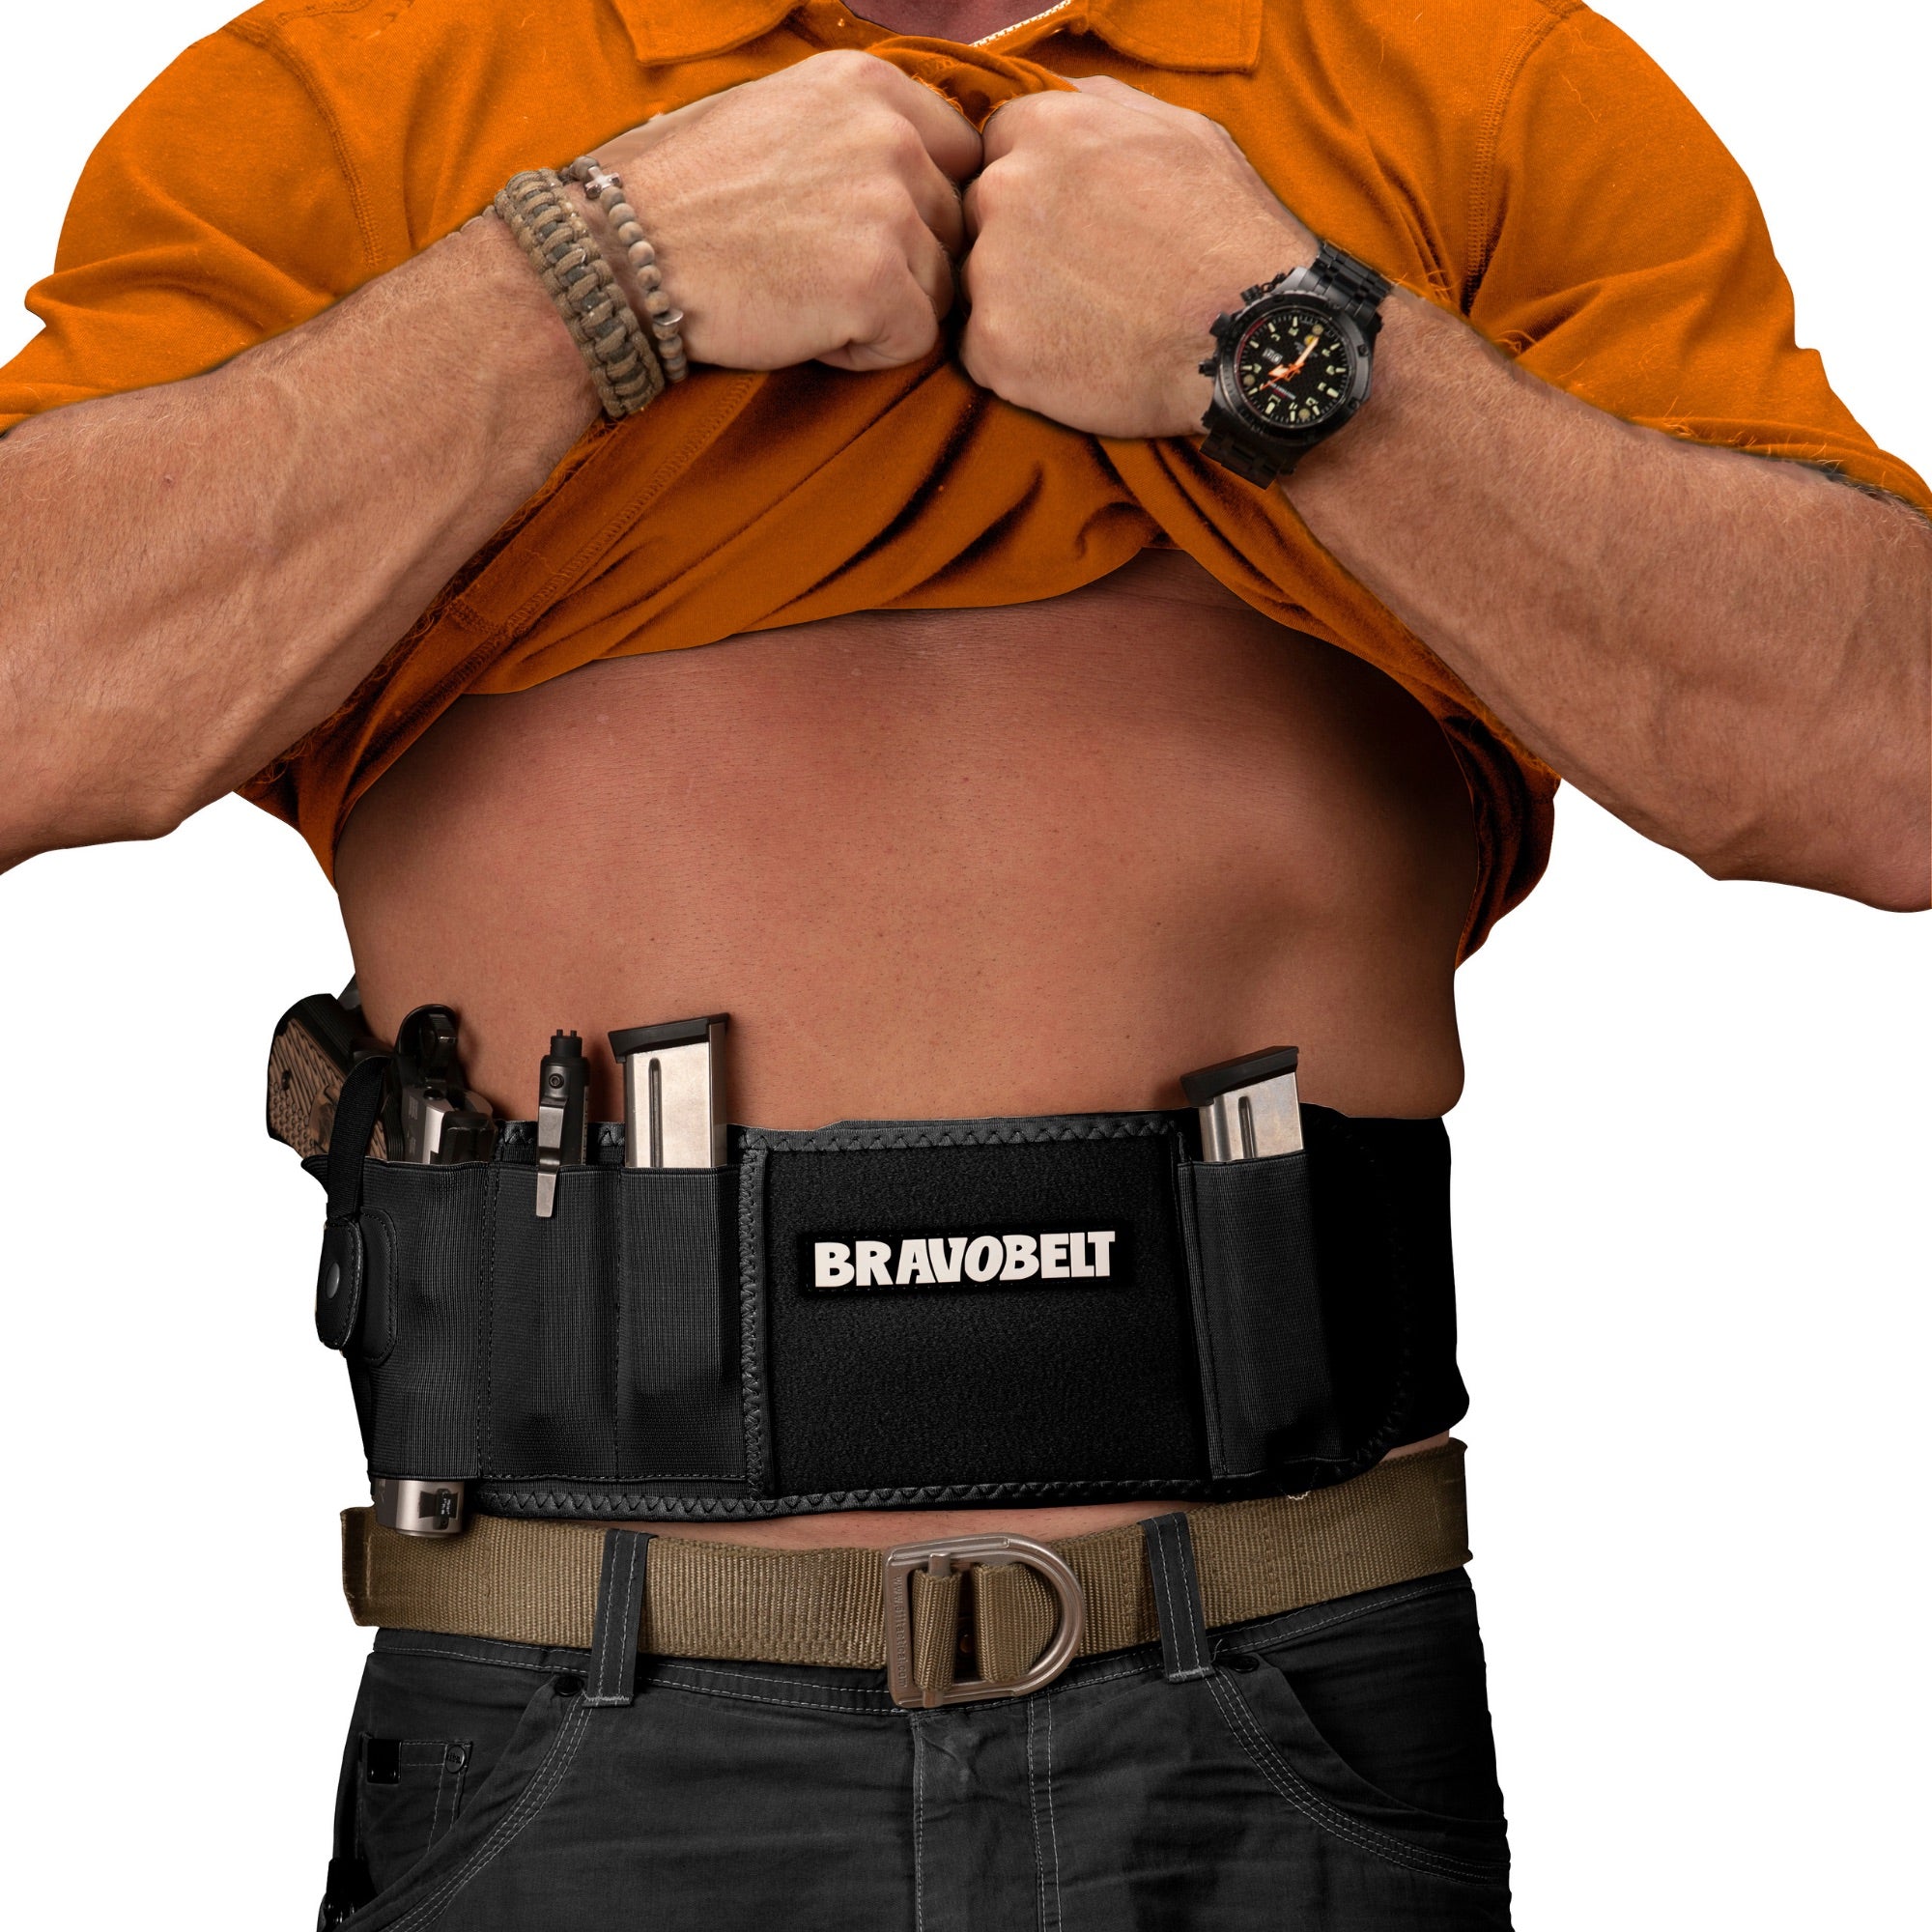 BravoBelt Belly Band Holster for Concealed Carry - Unisex - Black